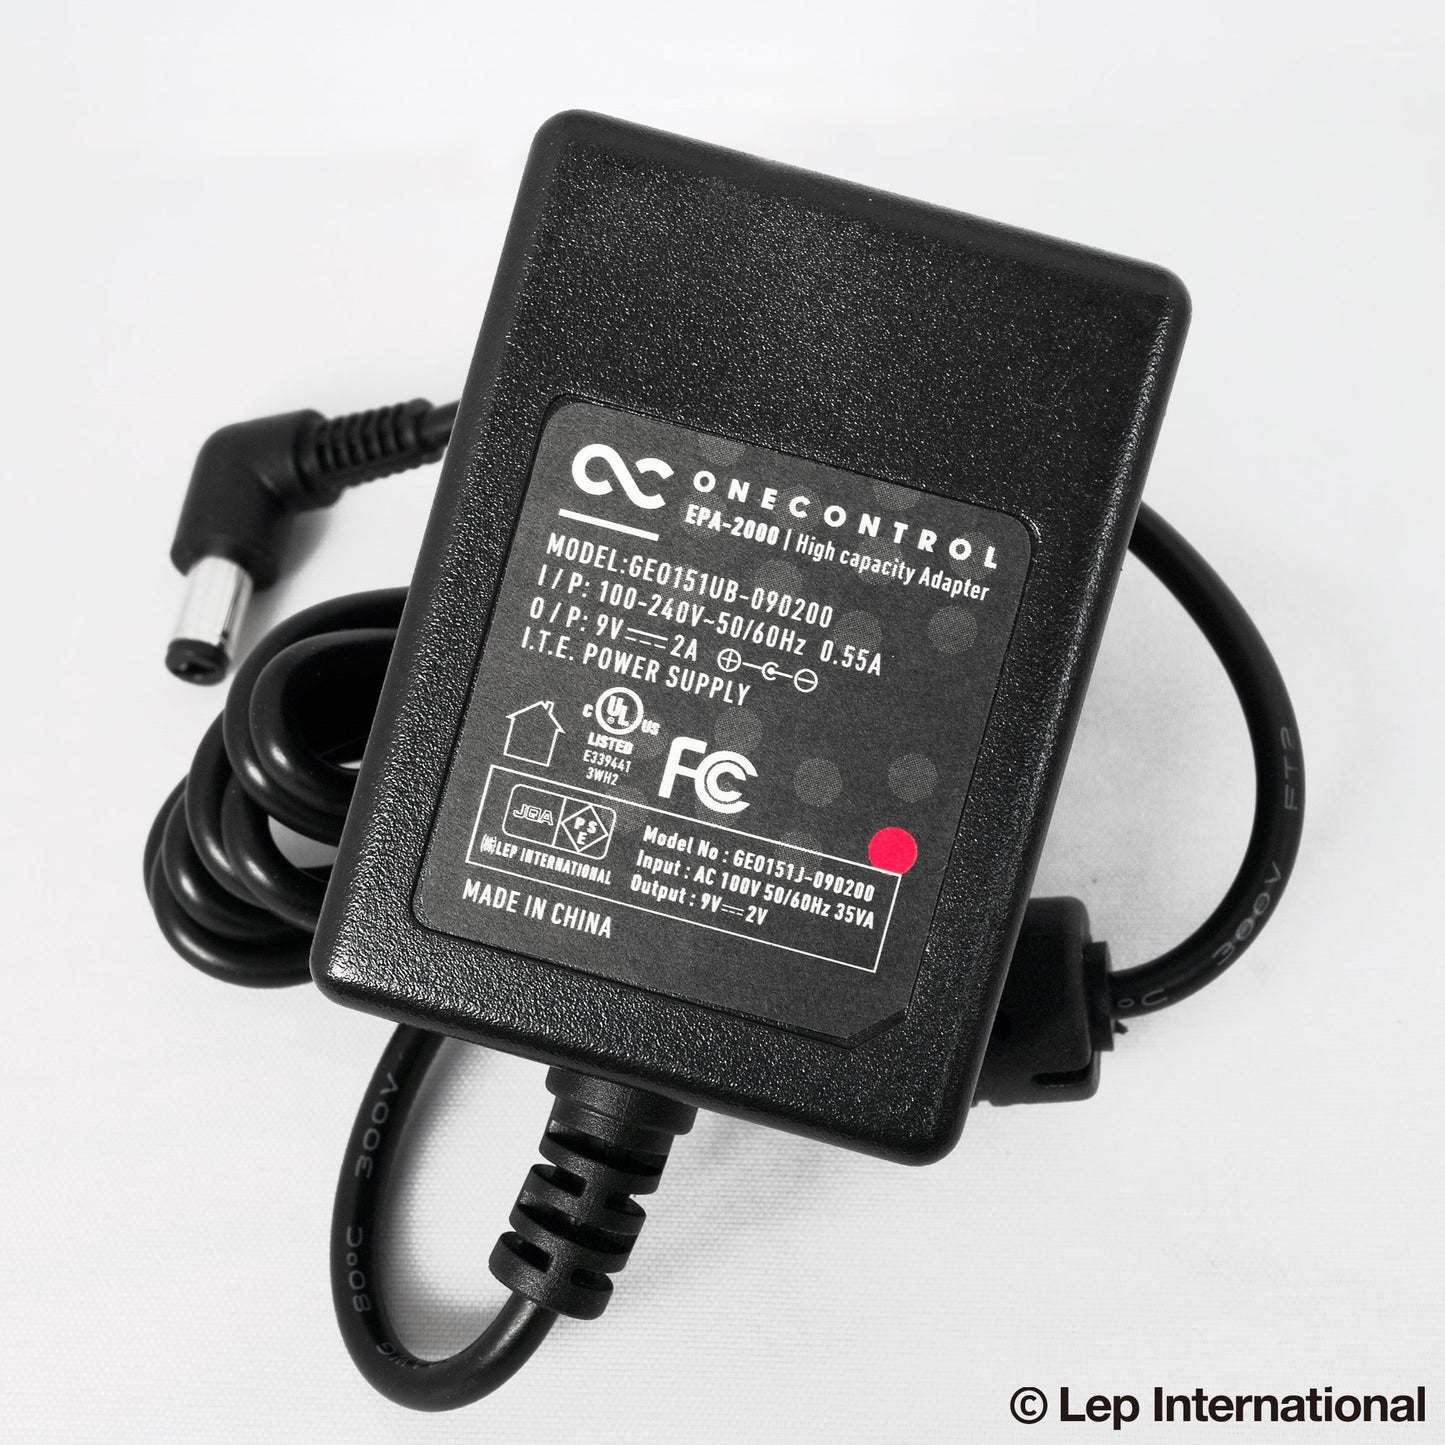 【10%OFF】EPA-2000 High capacity Adapter (OC-EPAV2)